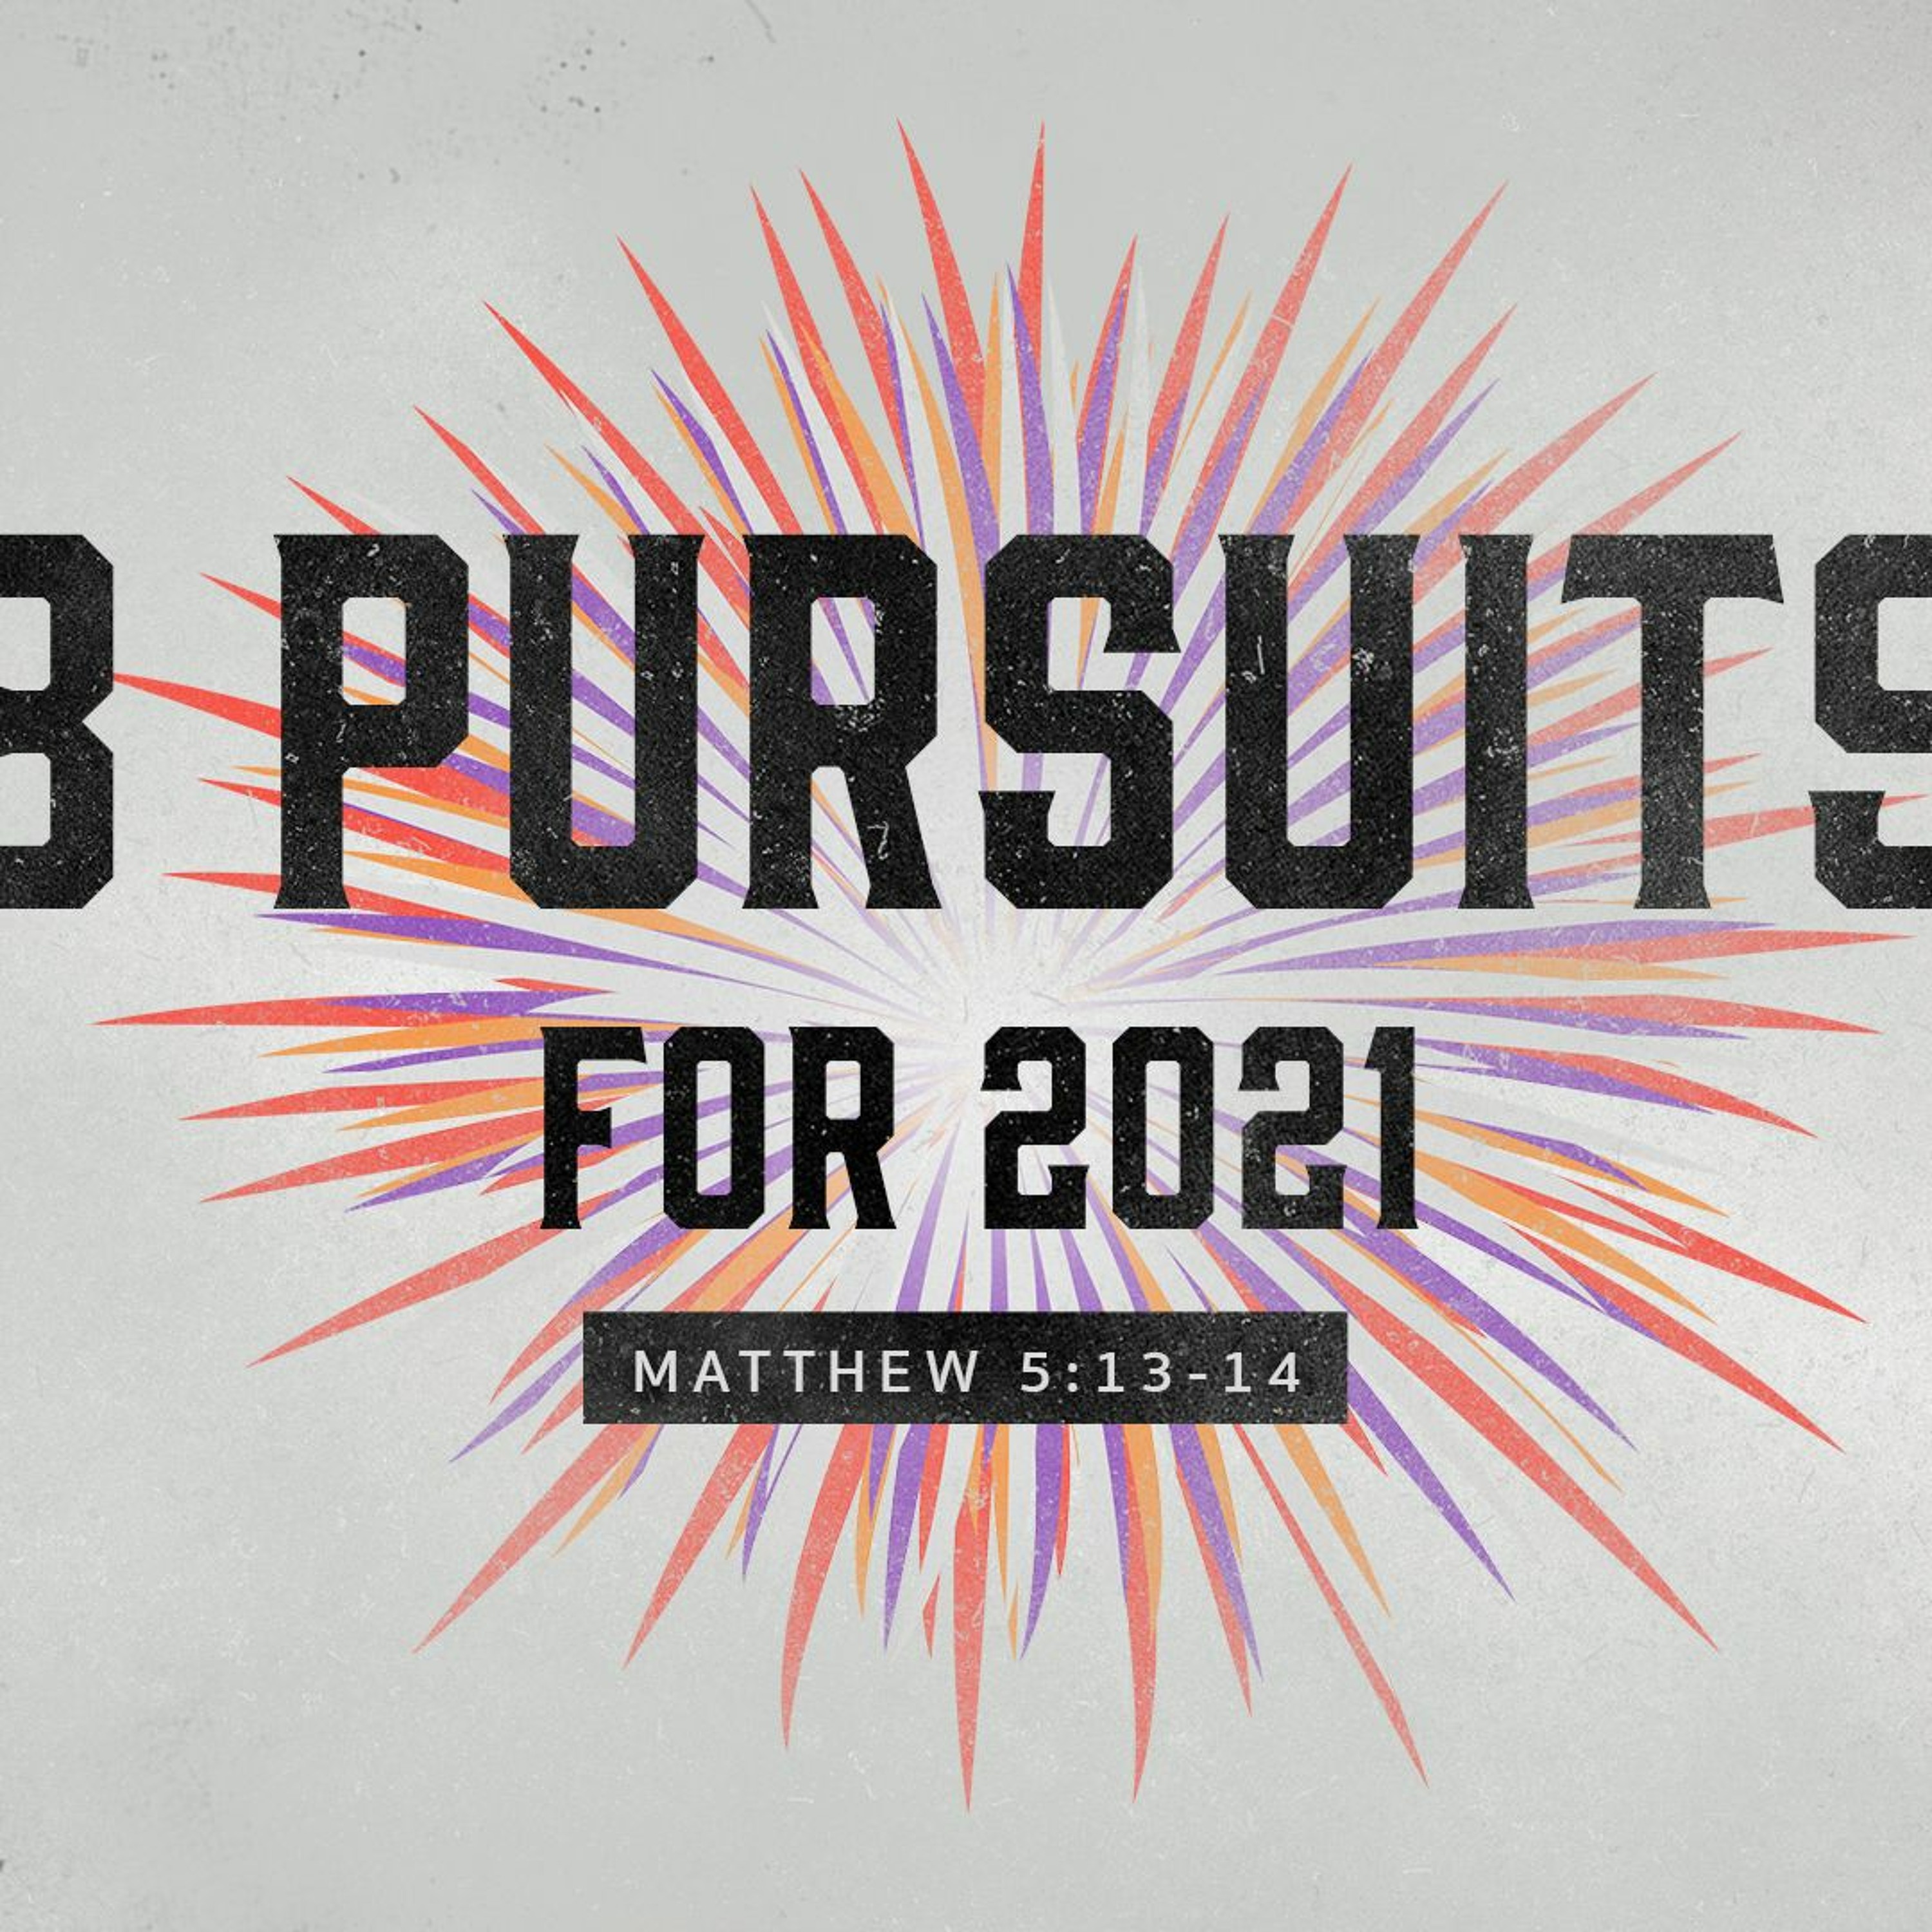 3 Pursuits For 2021